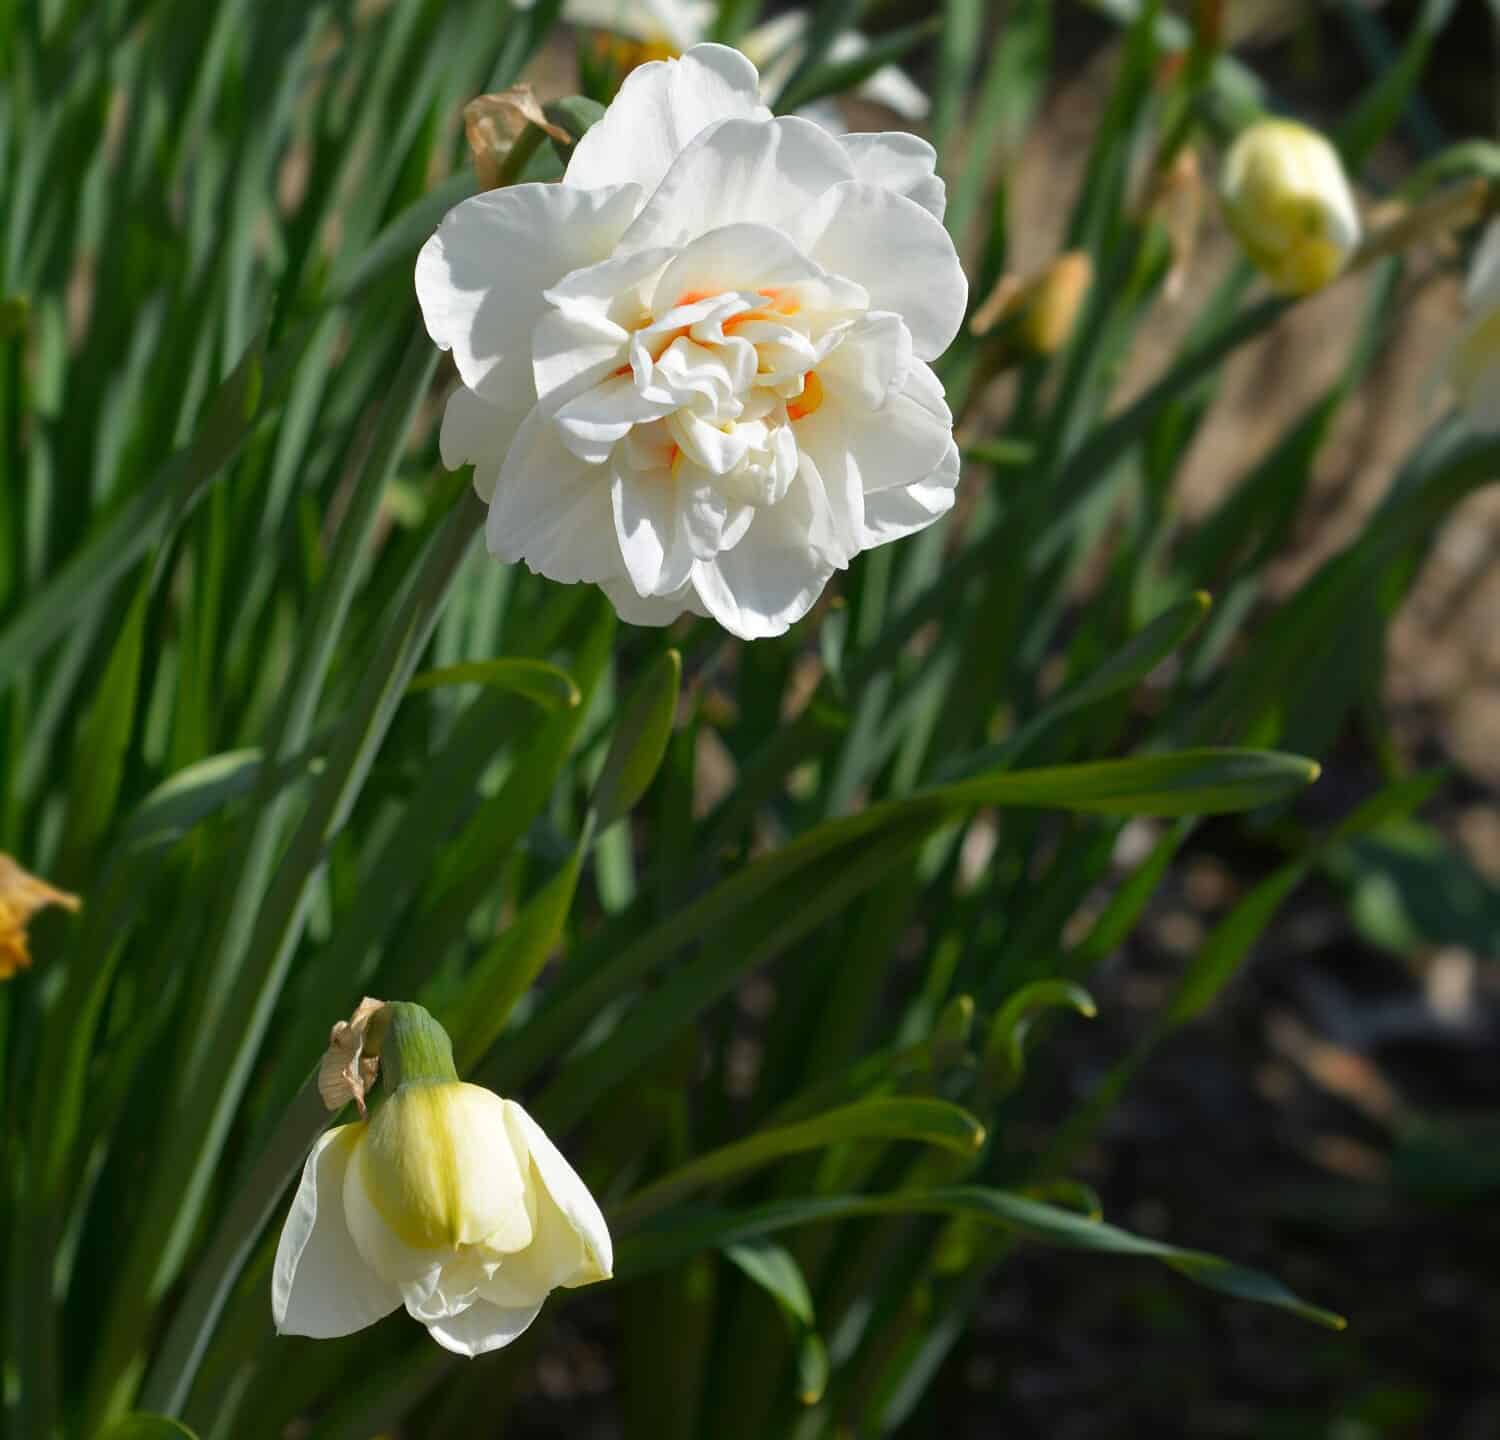 Double Daffodil Flower Drift fiori bianchi e arancioni - nome latino - Narcissus Flower Drift